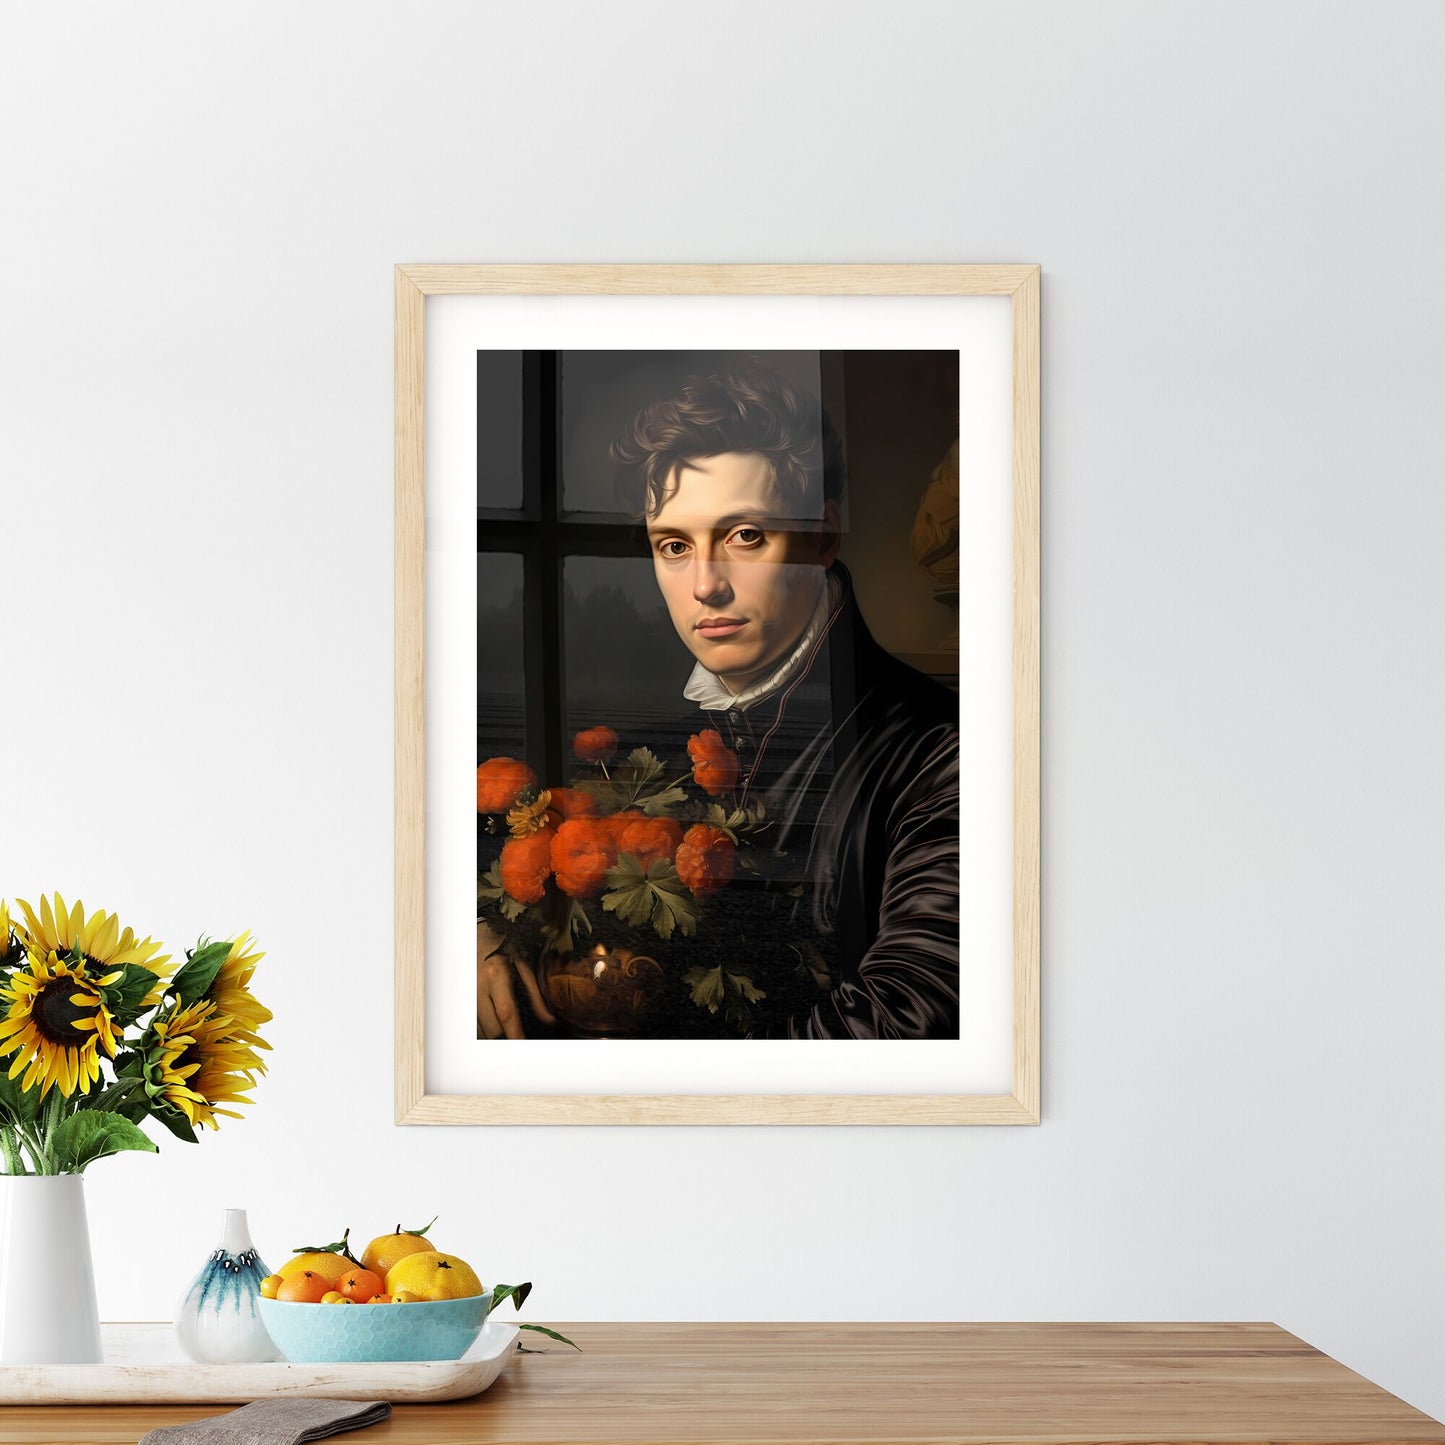 Carl Maria Friedrich Ernst Von Weber German Composer - A Man Holding A Bouquet Of Flowers Default Title